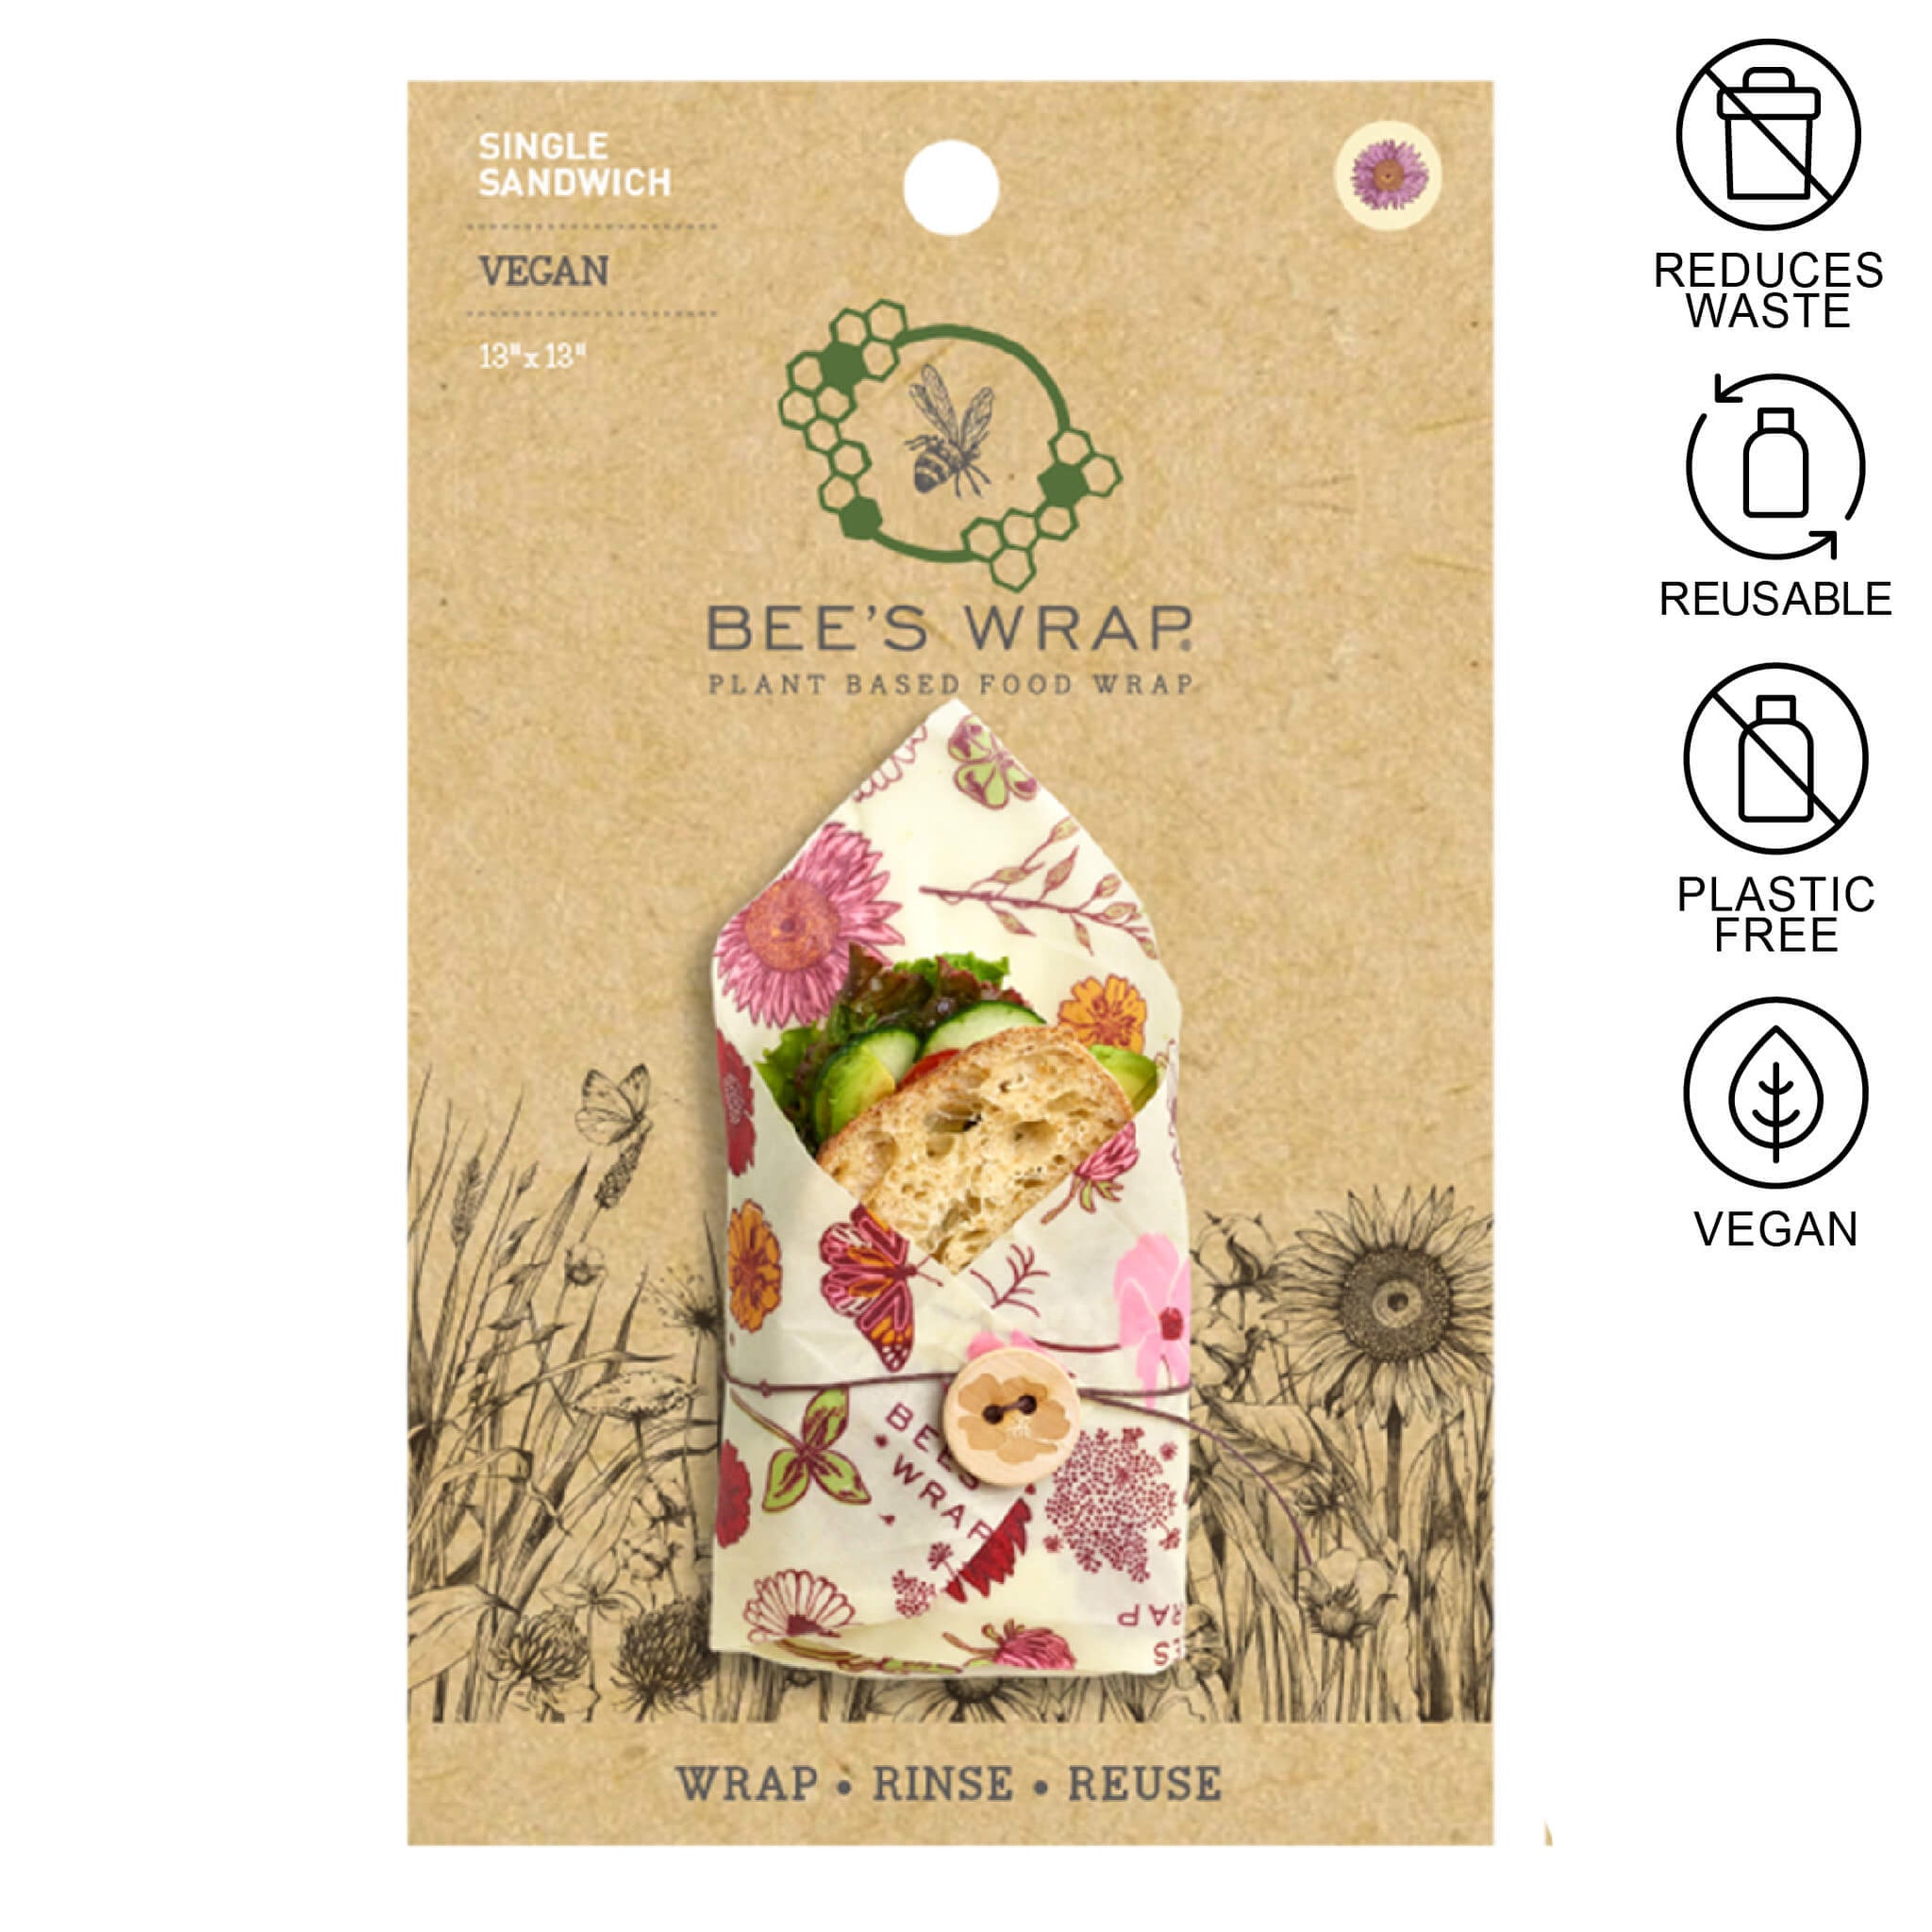 vegan sandwich beeswax wrap